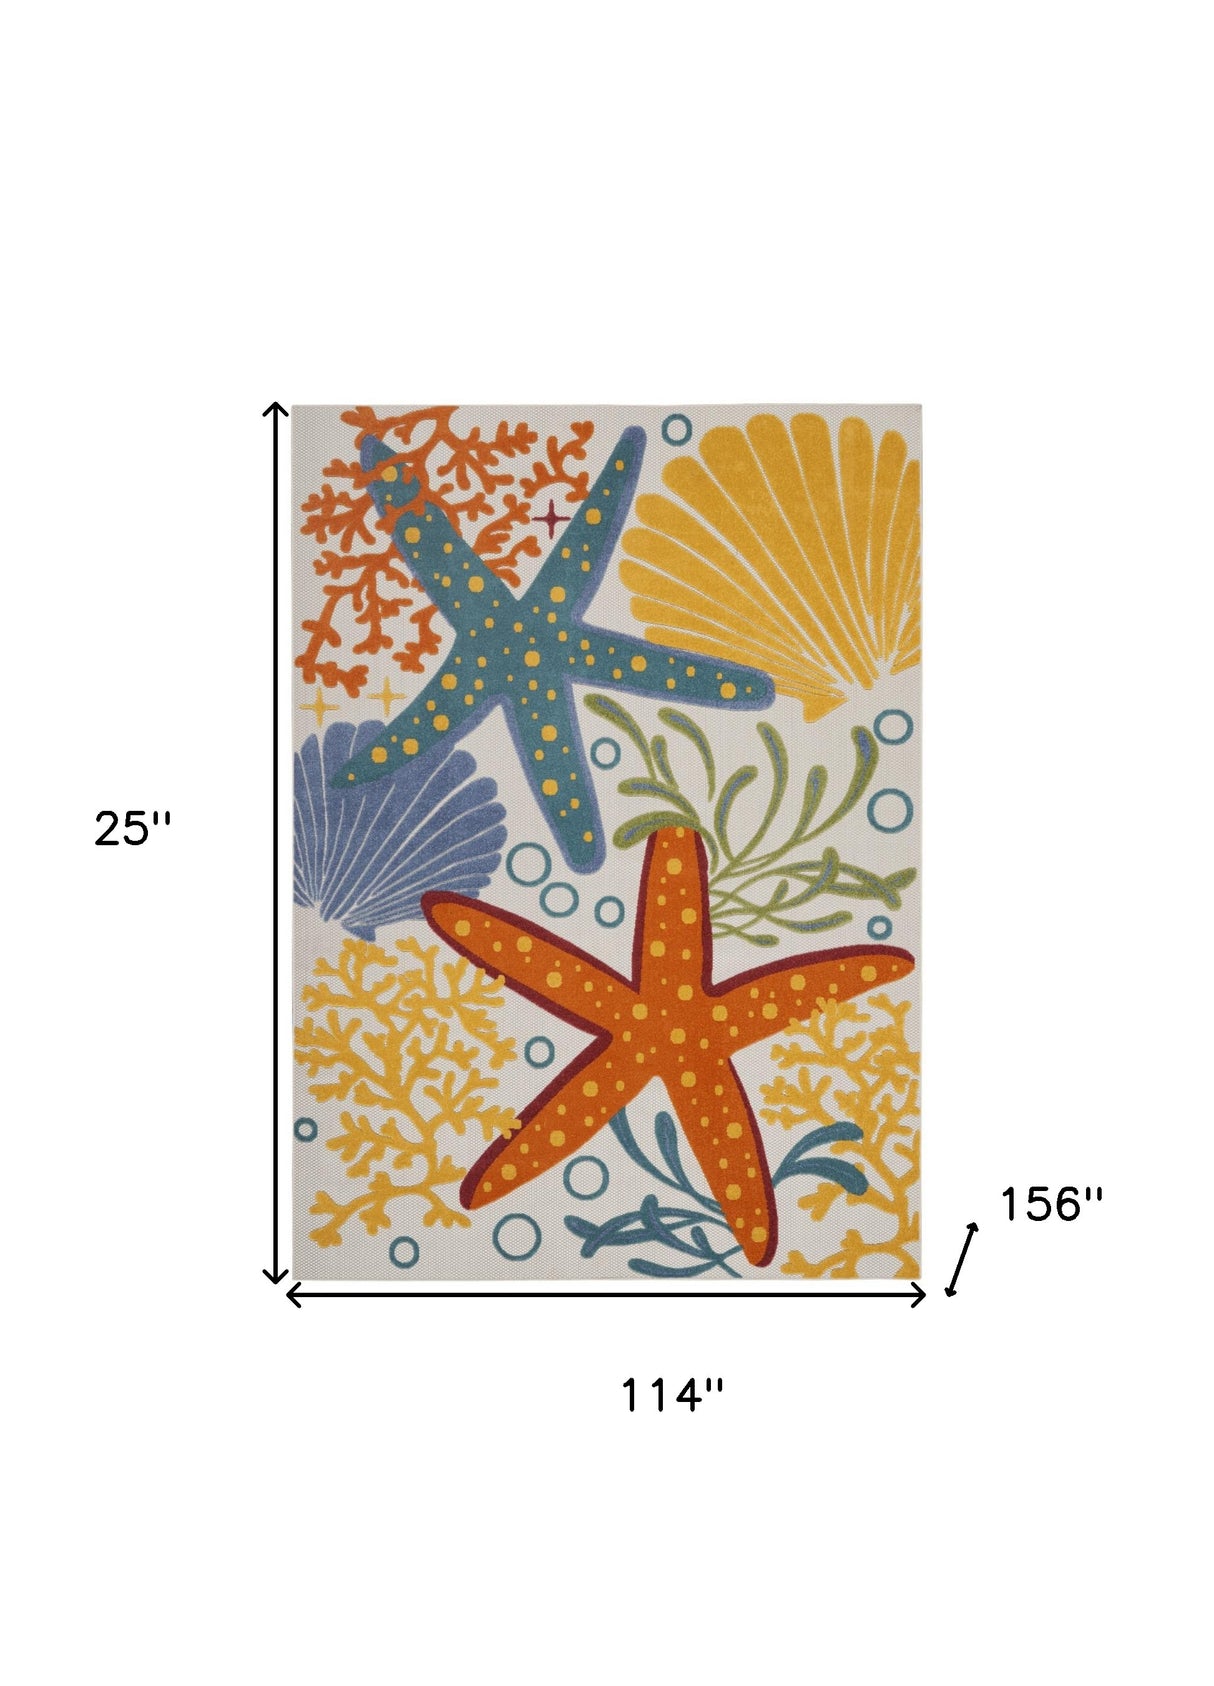 10' X 13' Orange Blue And Yellow Animal Print Non Skid Indoor Outdoor Area Rug